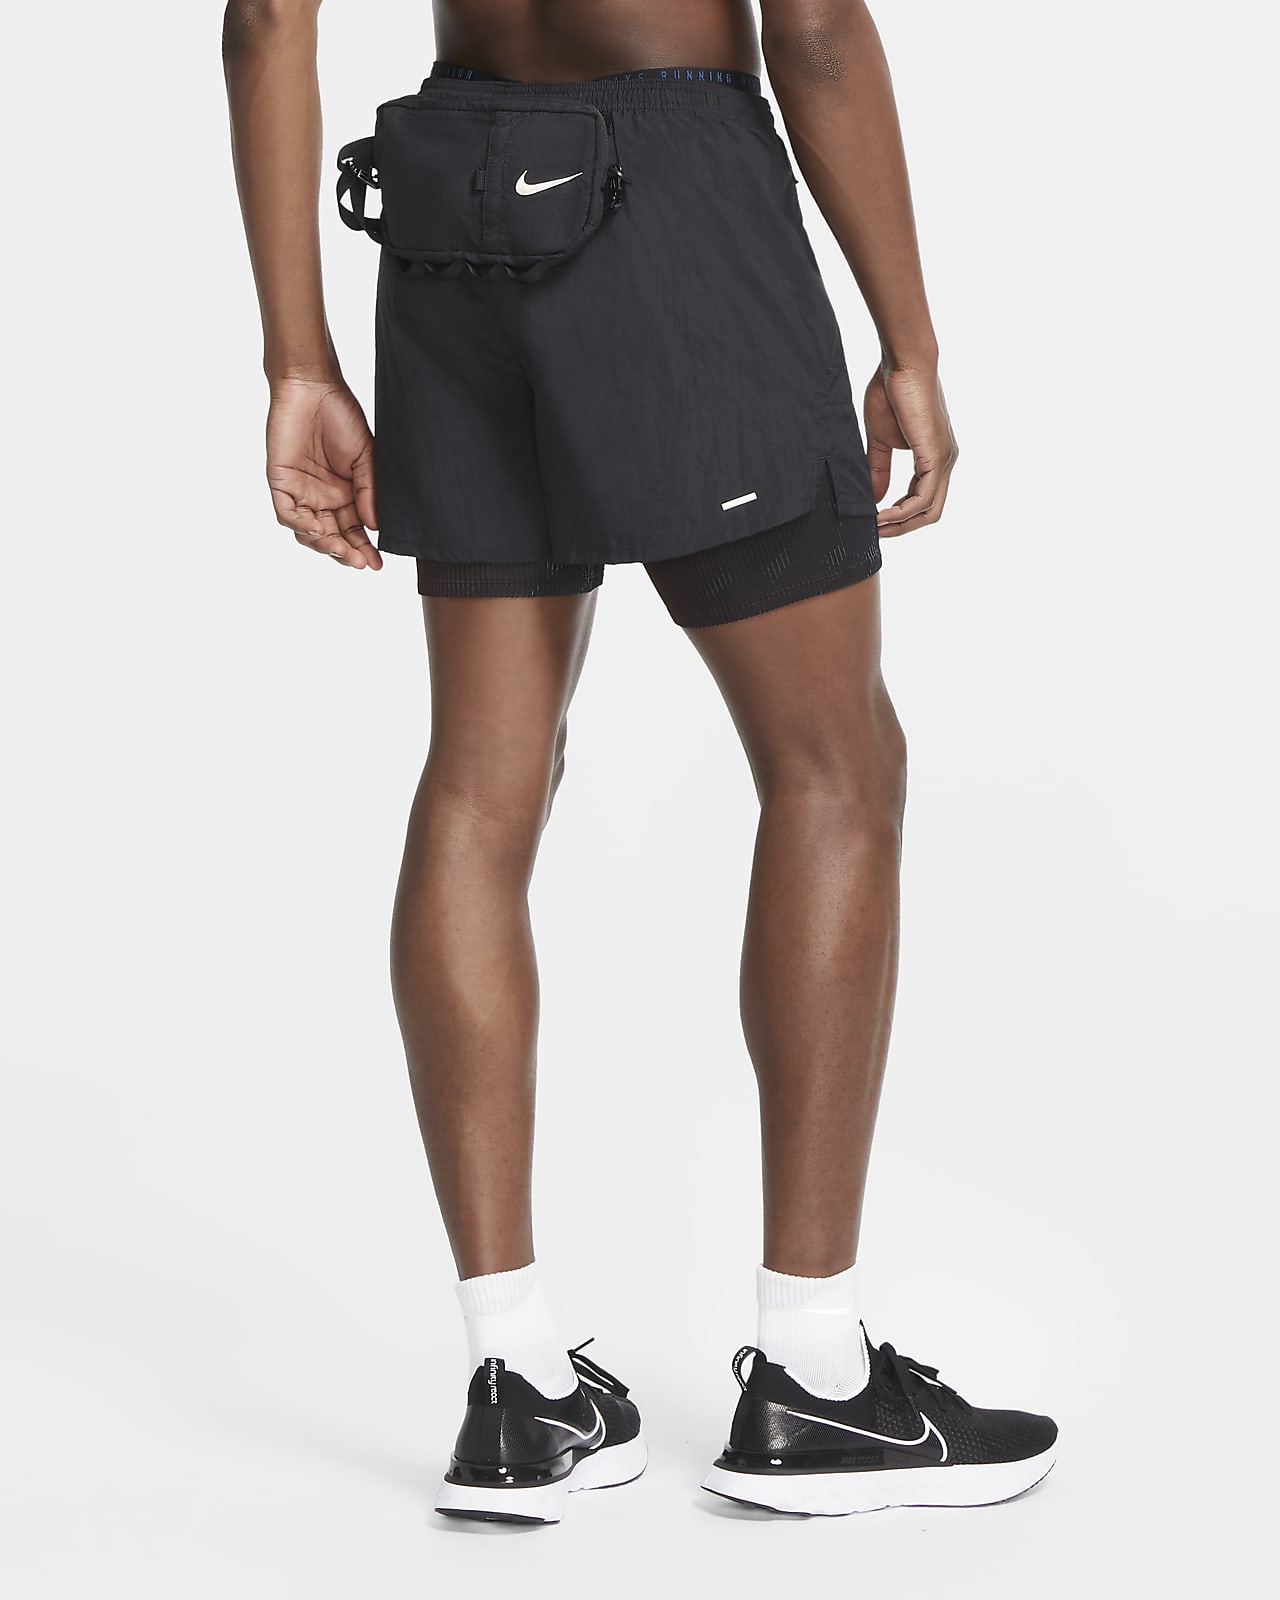 Nike Run Division Men's 3-In-1 Running Shorts